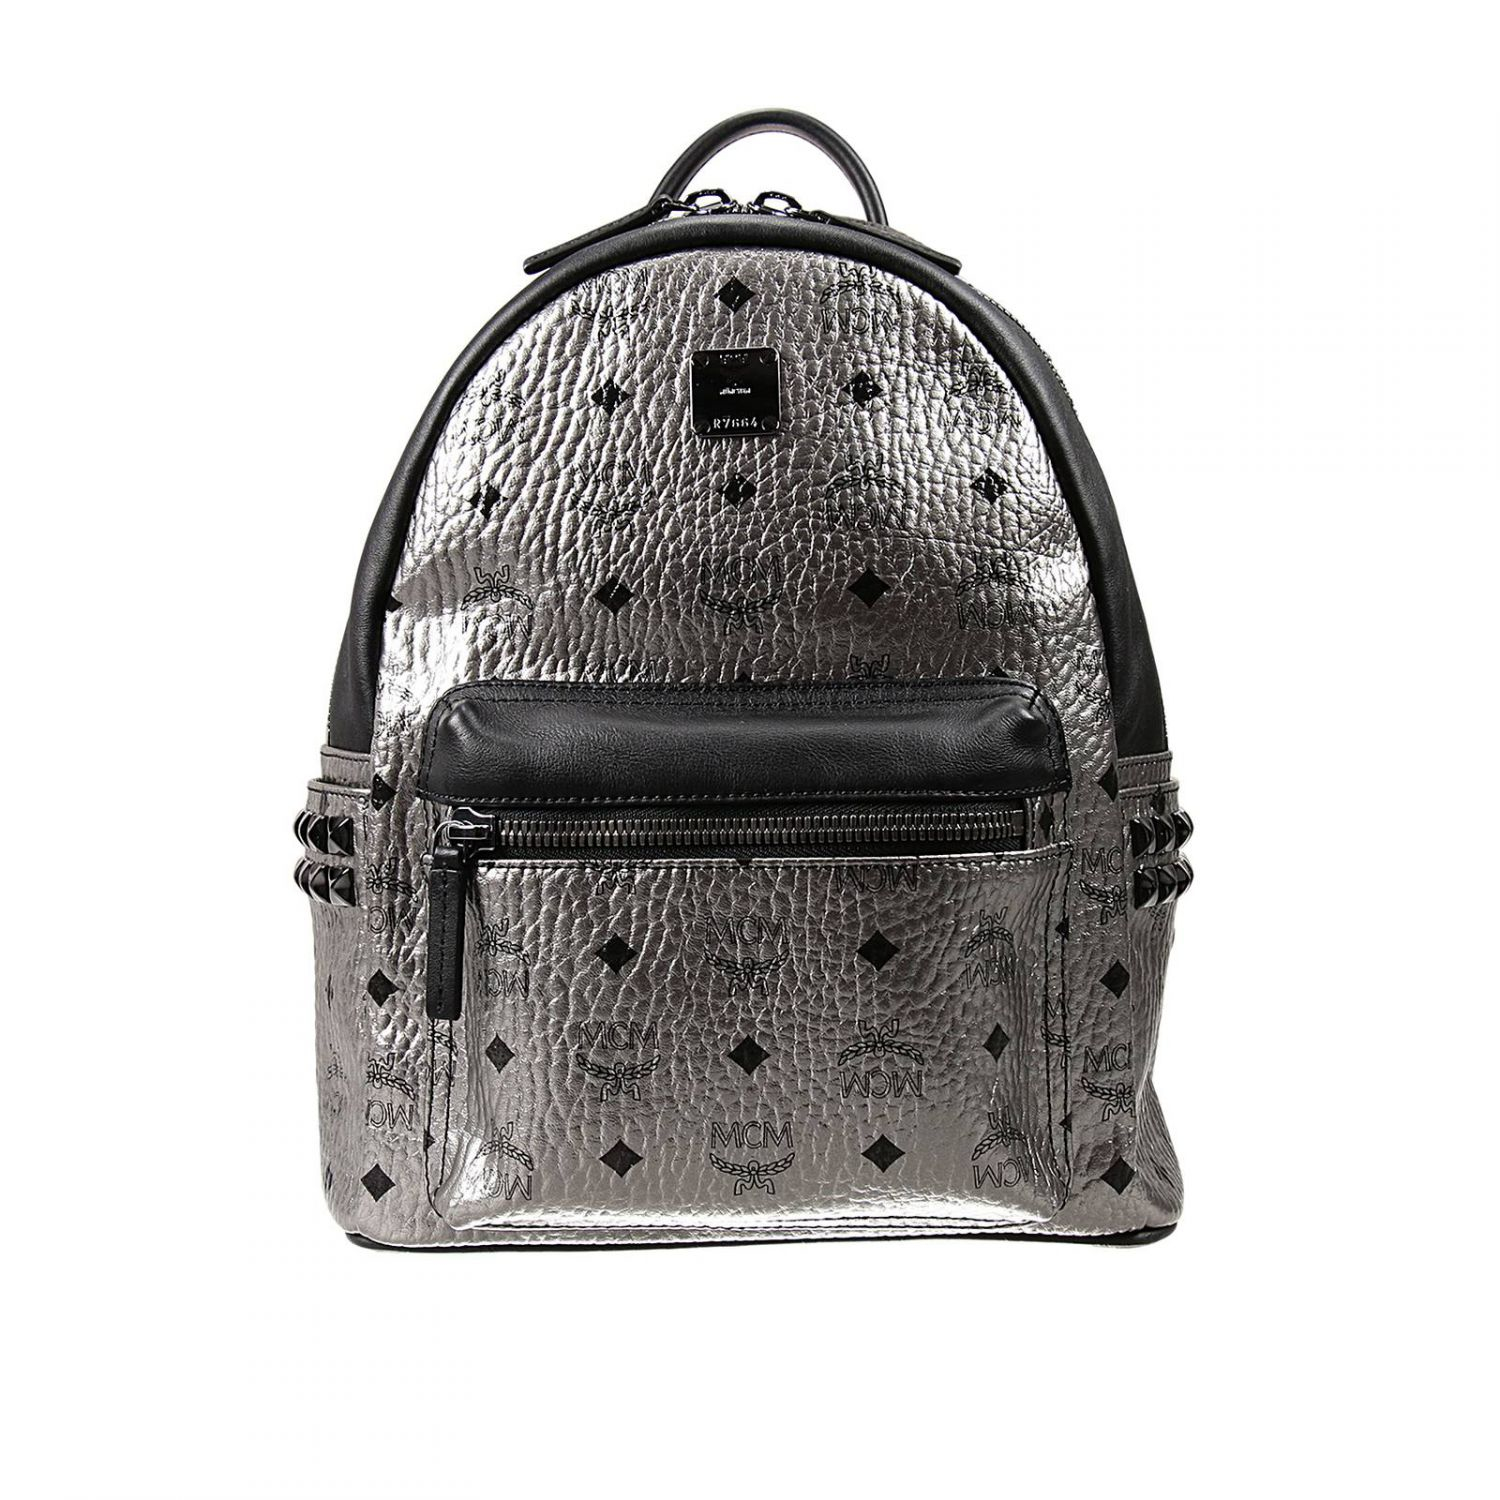 MCM Leather Mini 'Stark' Backpack in Silver (Metallic) - Lyst